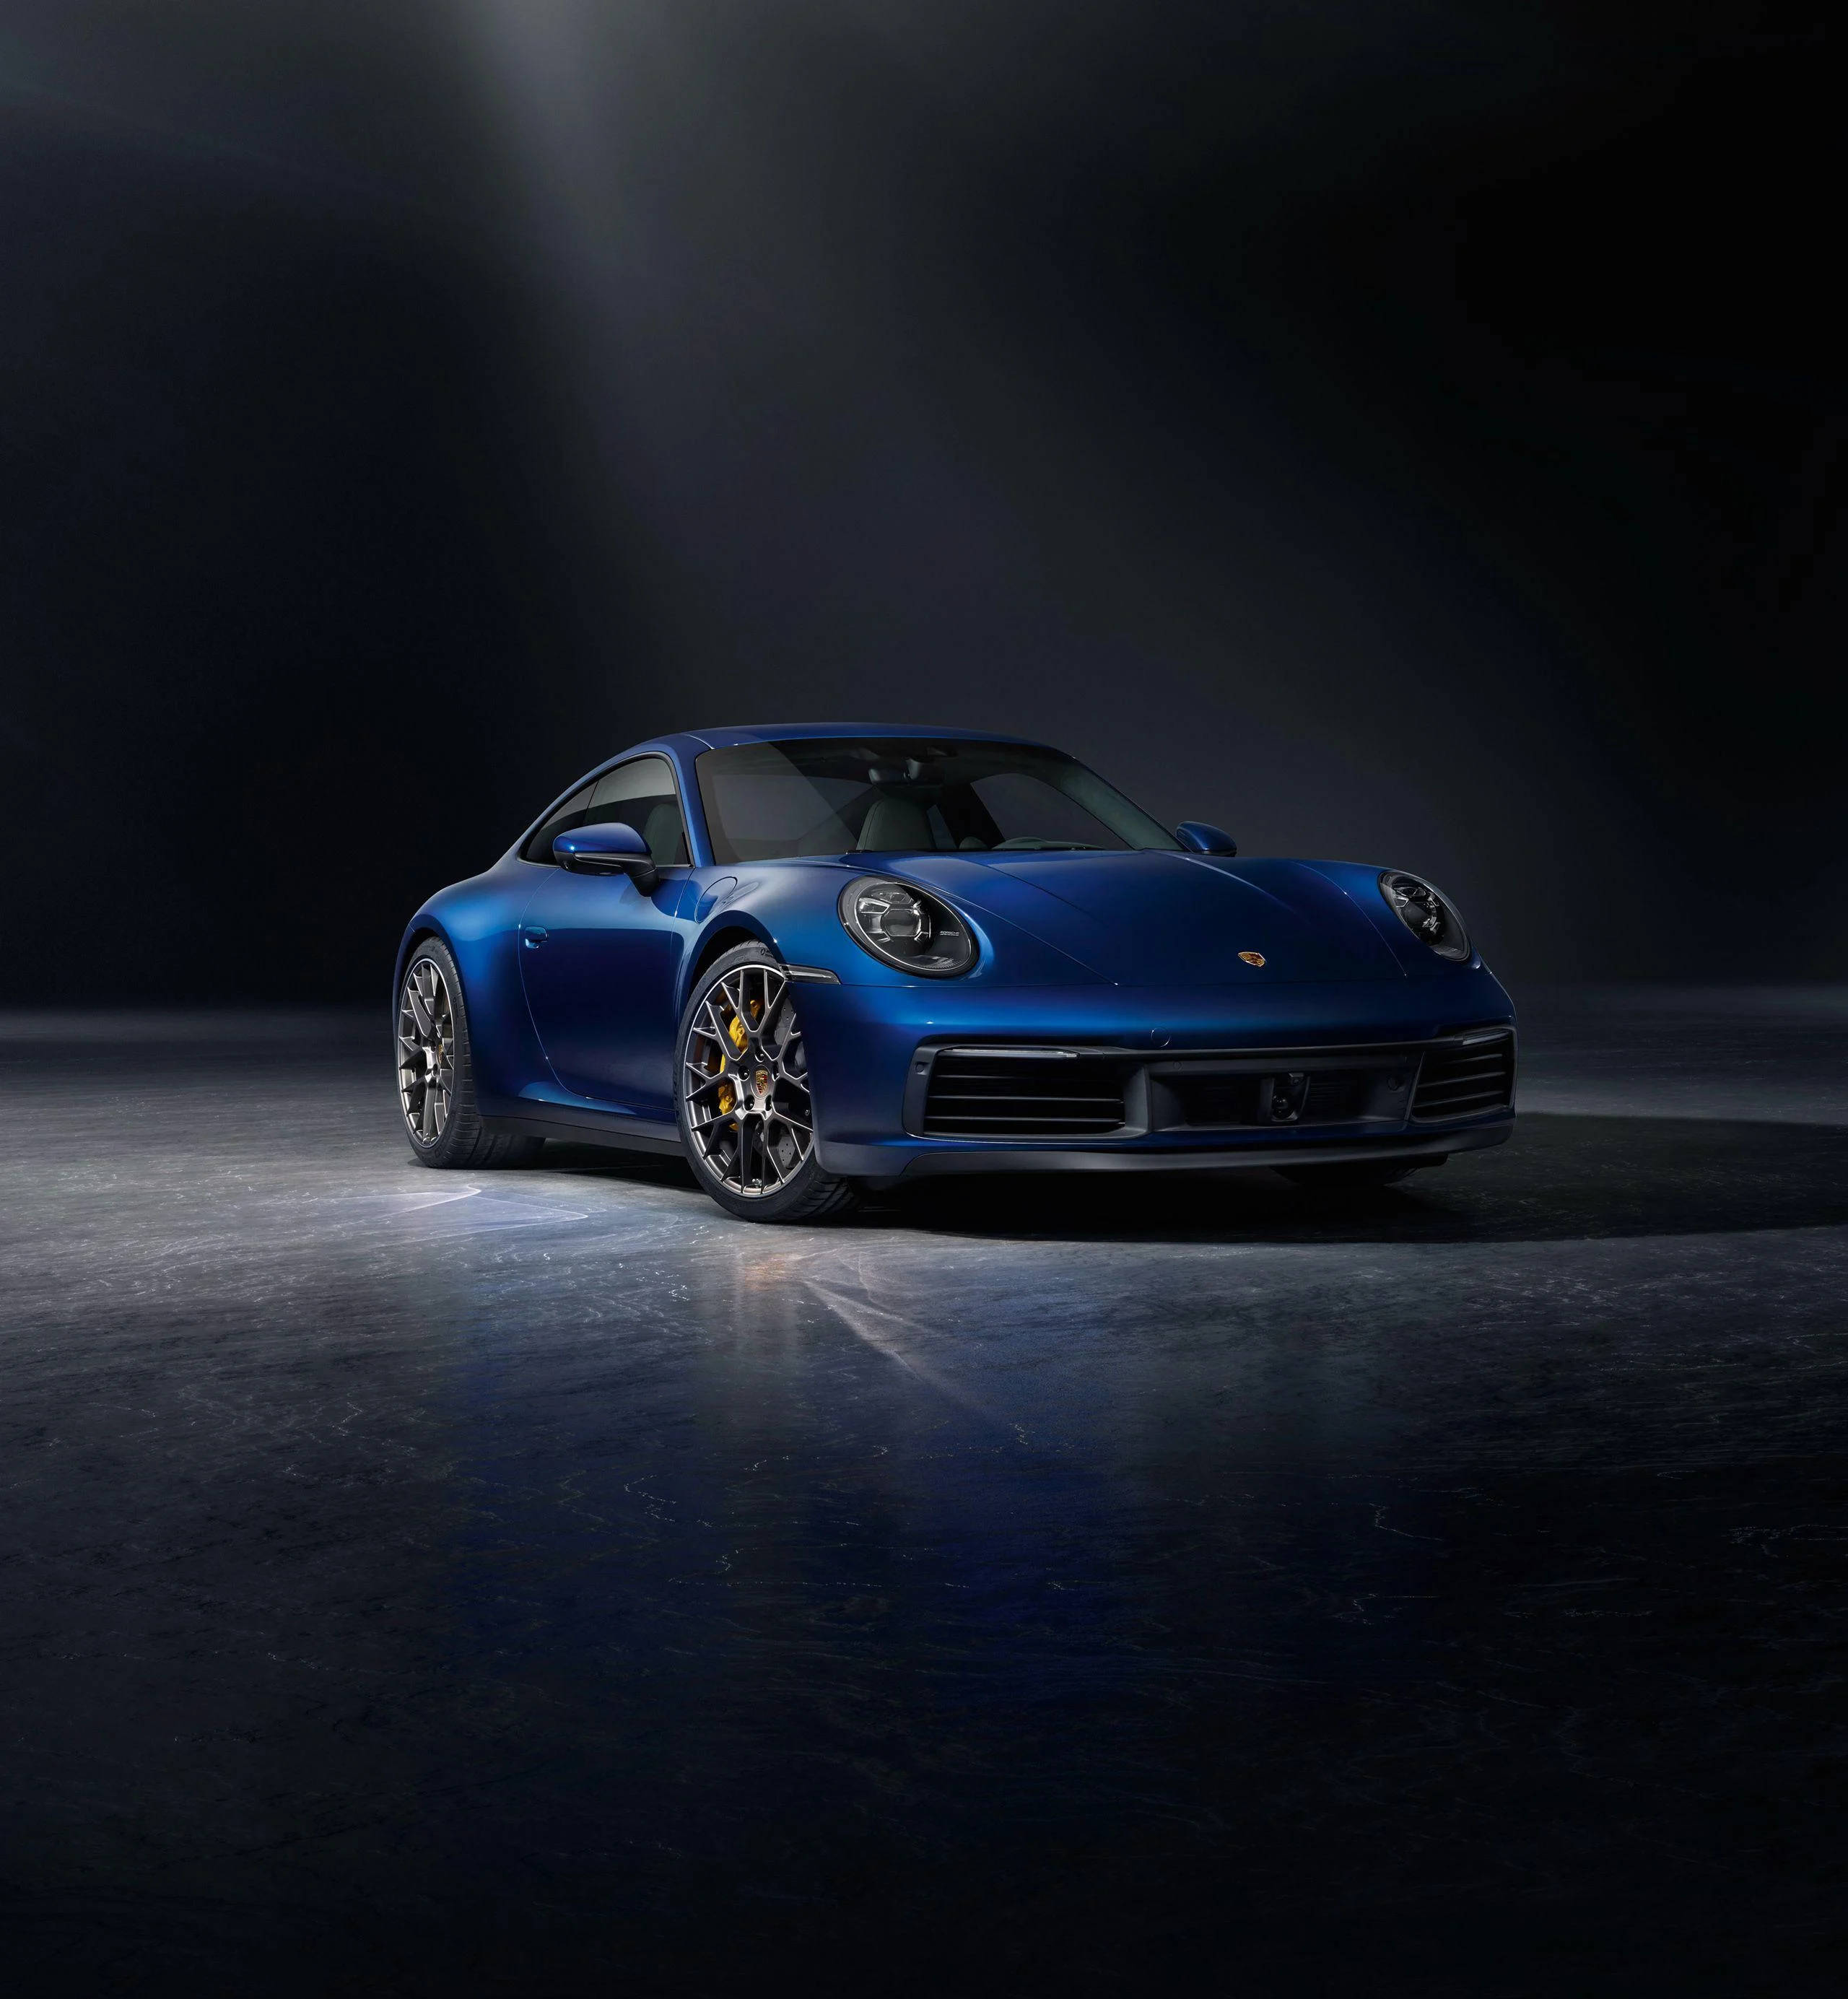 Blue Porsche 911 In Dark Room Wallpaper